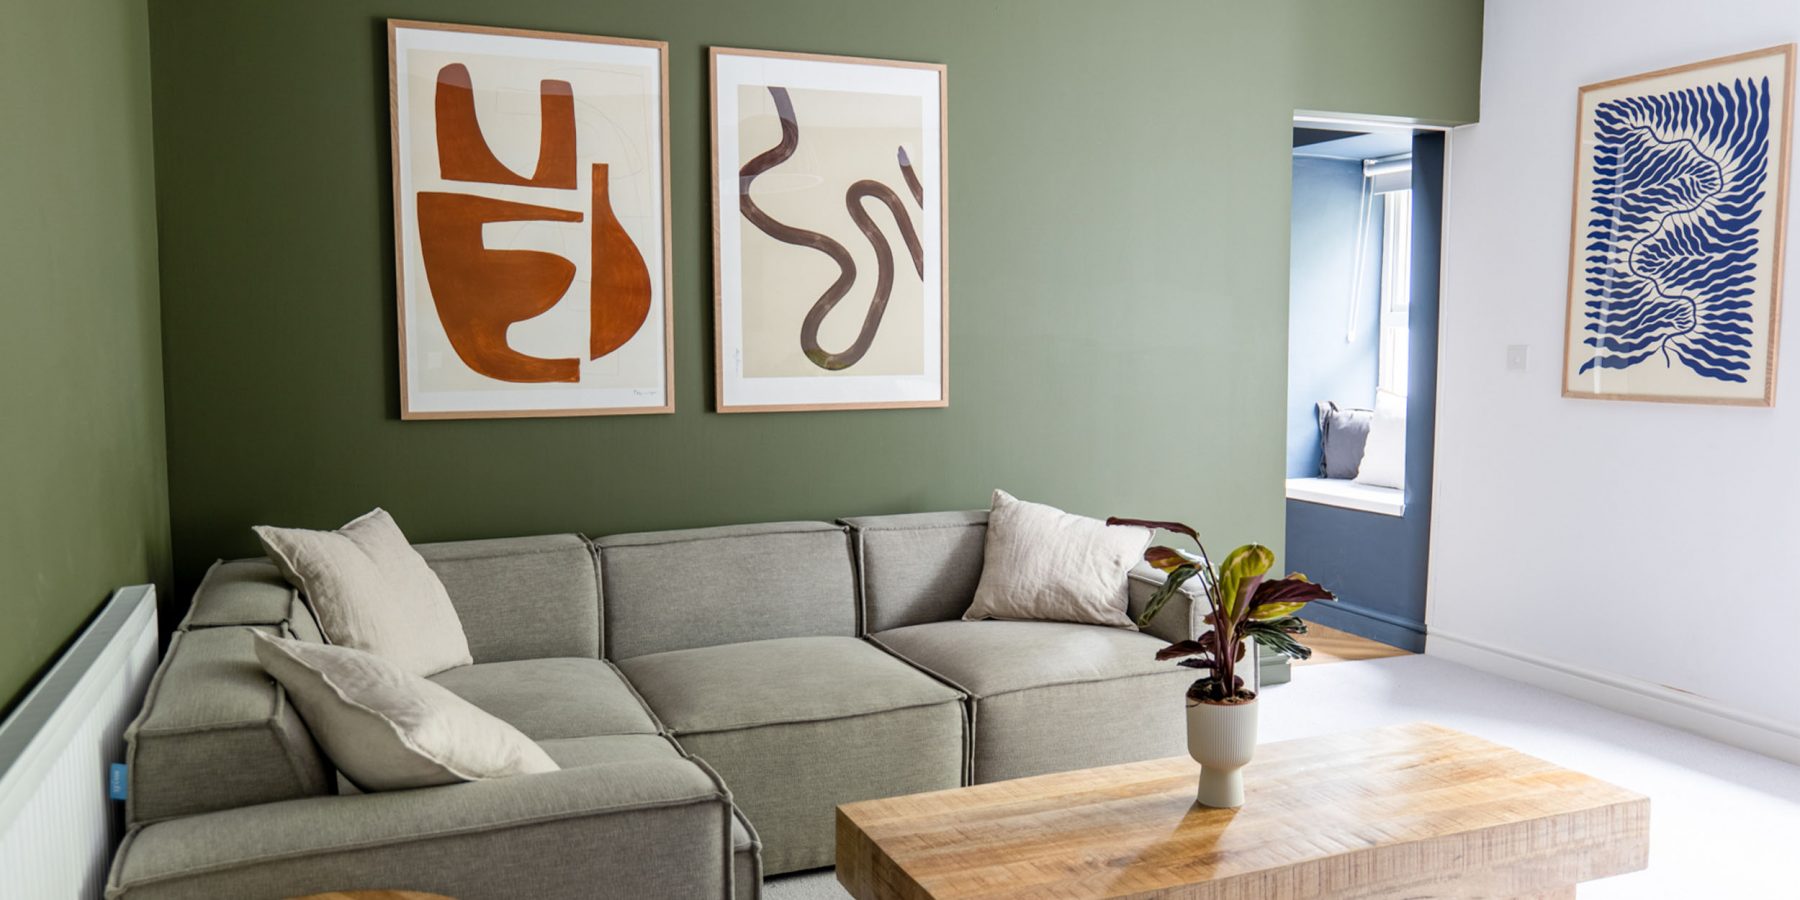 Living room, sofa, table, green walls, paintings, natural light